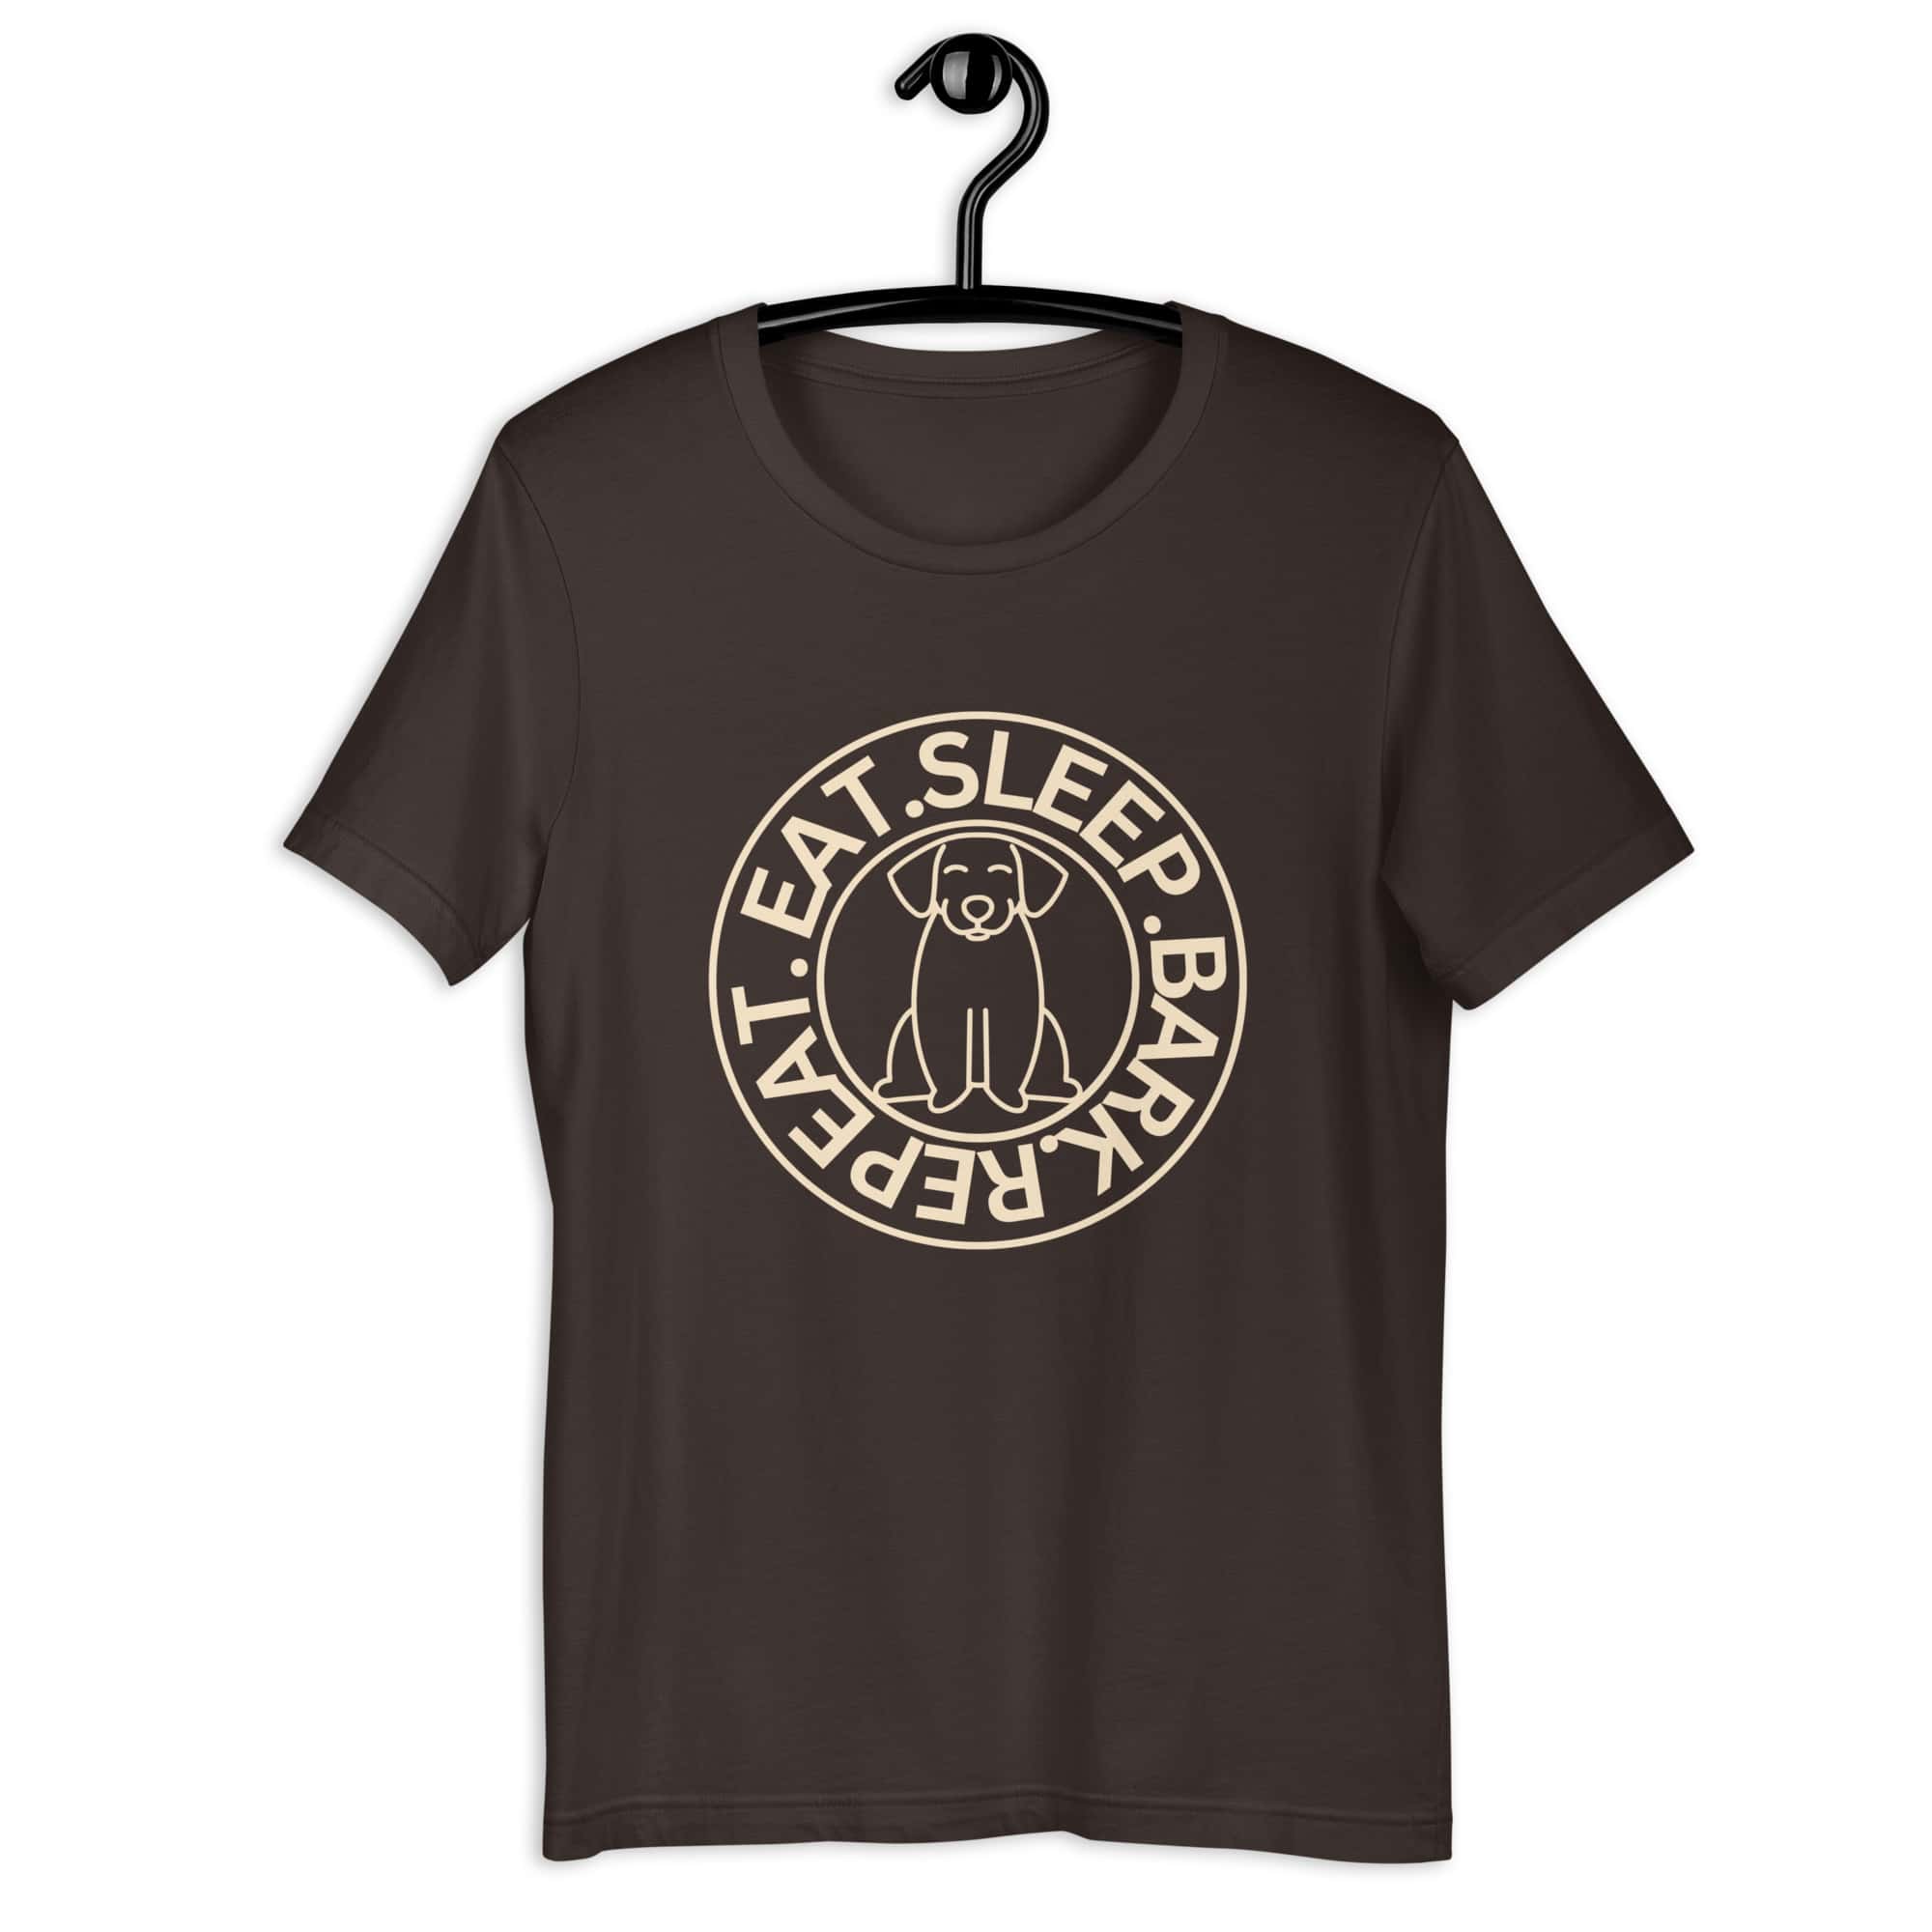 Eat Sleep Bark Repeat Ransylvanian Hound (Erdélyi Kopó) Unisex T-Shirt. Brown